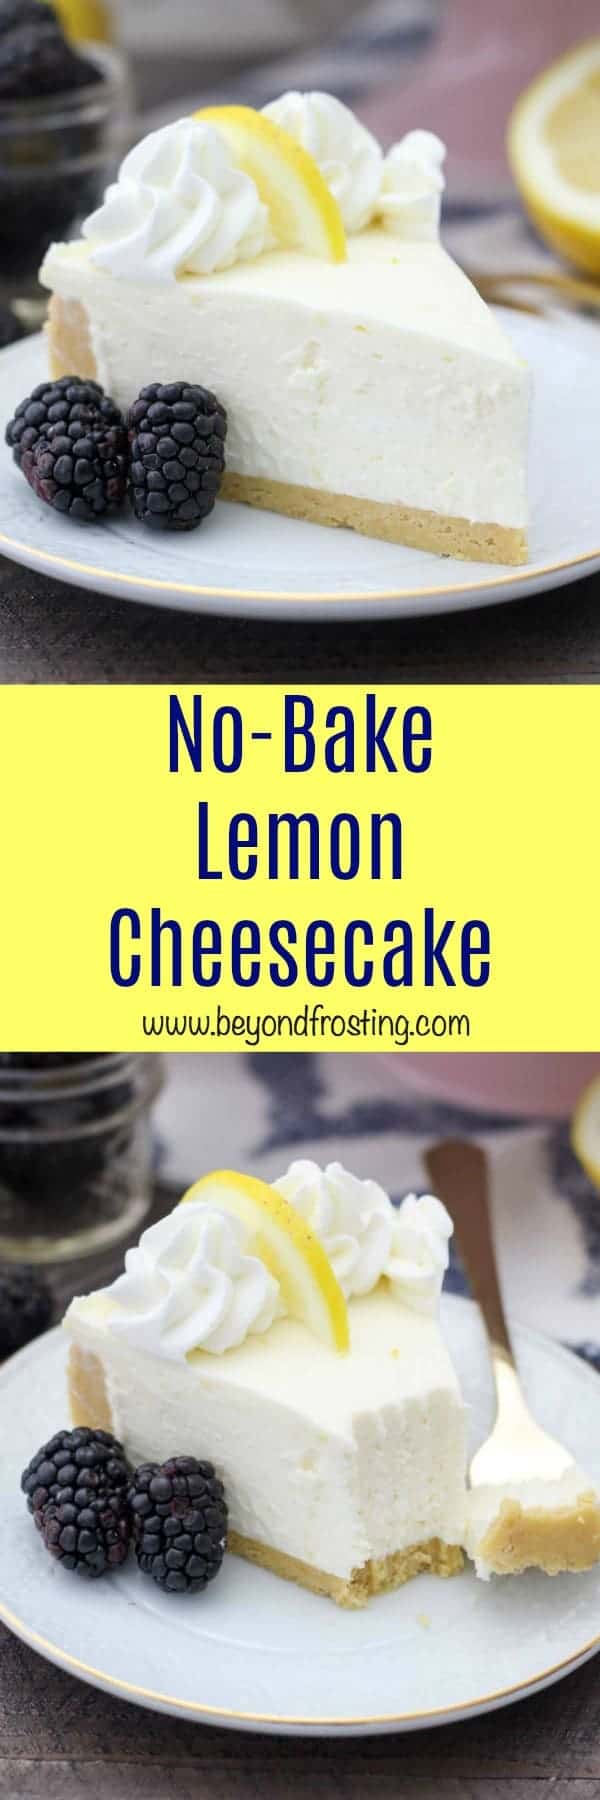 No-Bake Lemon Cheesecake - Beyond Frosting